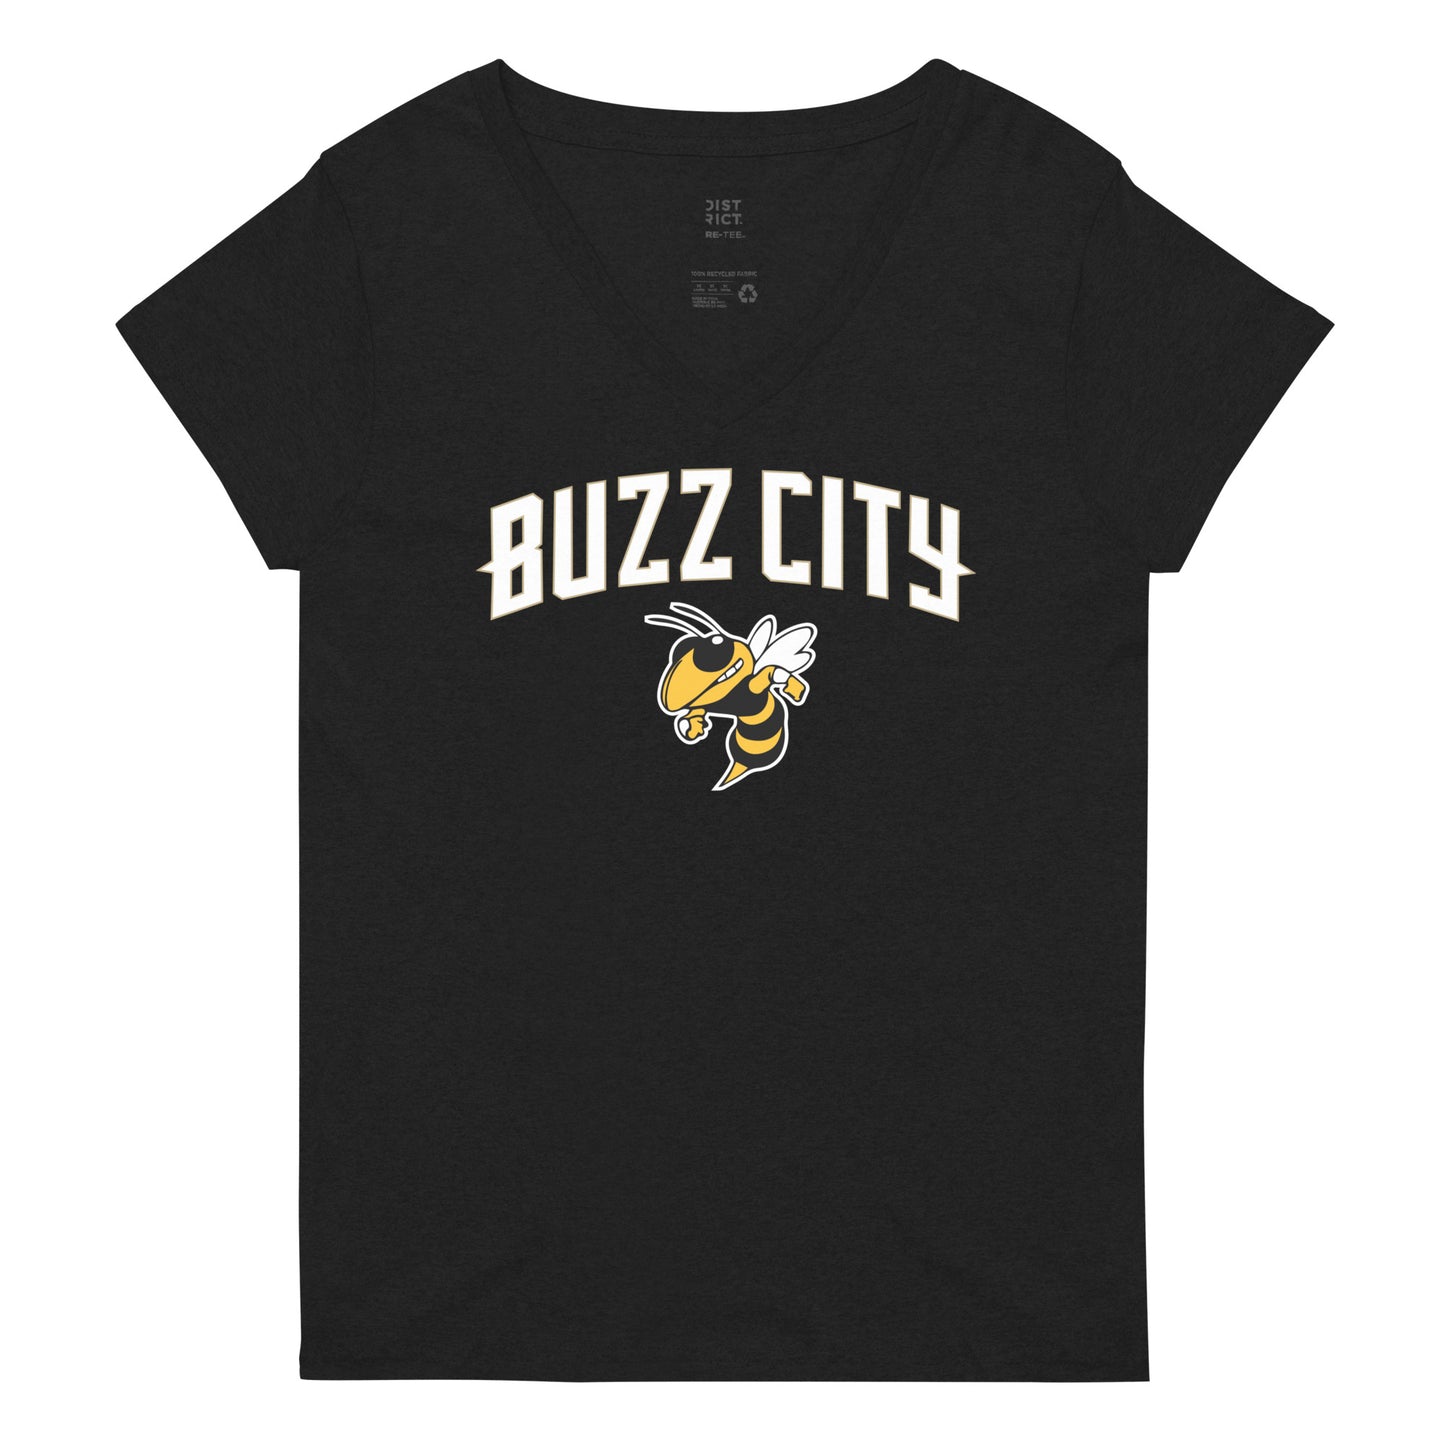 Buzz City Women’s V-neck t-shirt